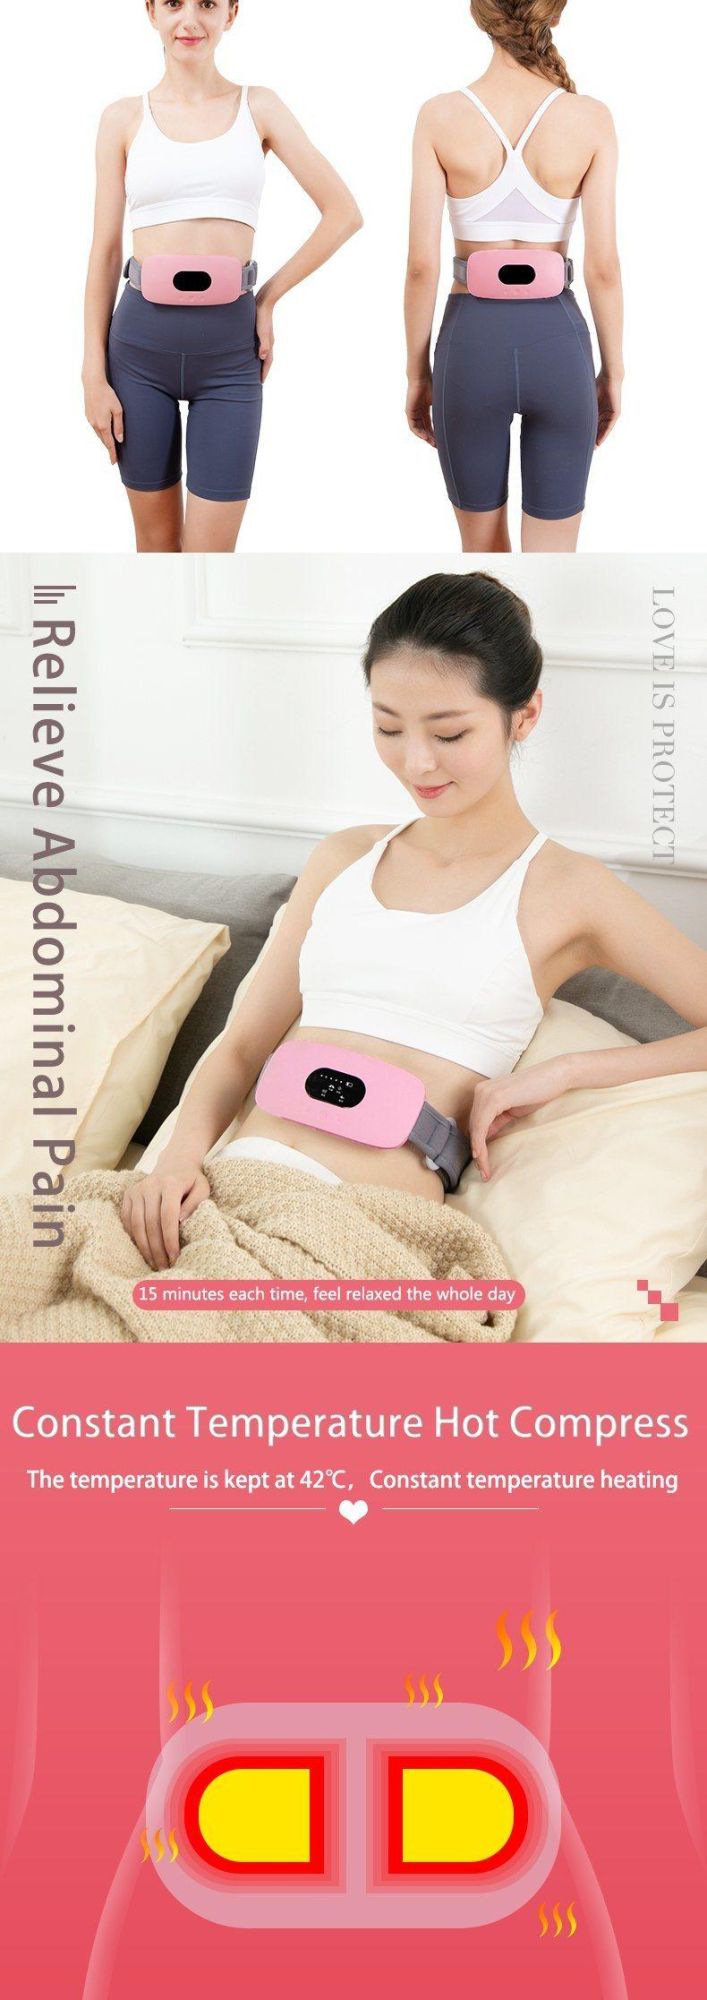 Hezheng Slimming Belt Vibrating Abdomen Body Belly Pain Relief Massager